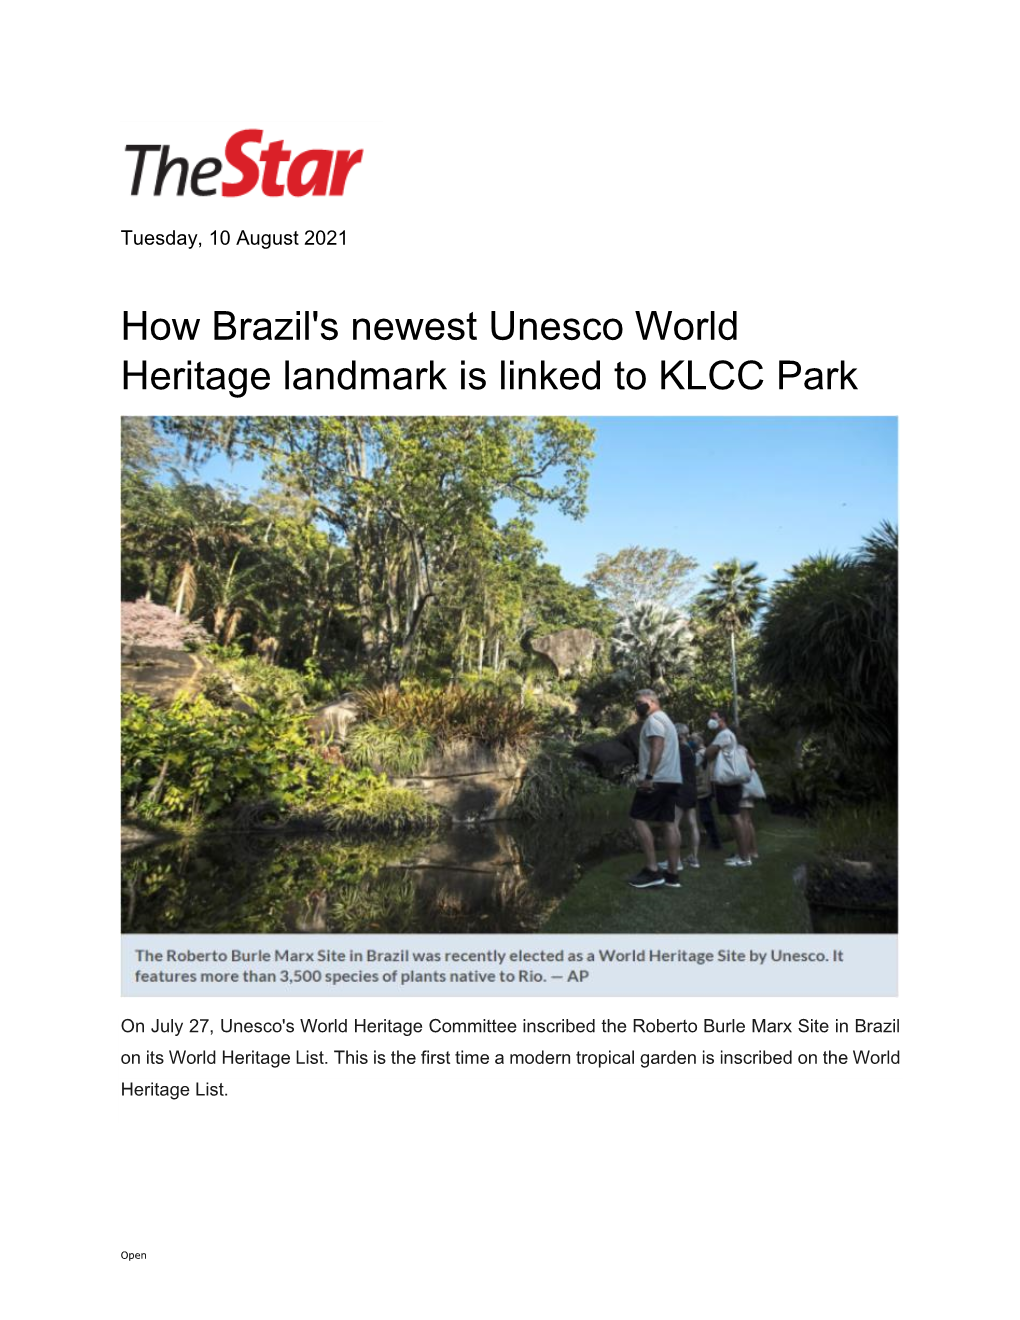 How Brazil's Newest Unesco World Heritage Landmark Is Linked to KLCC Park